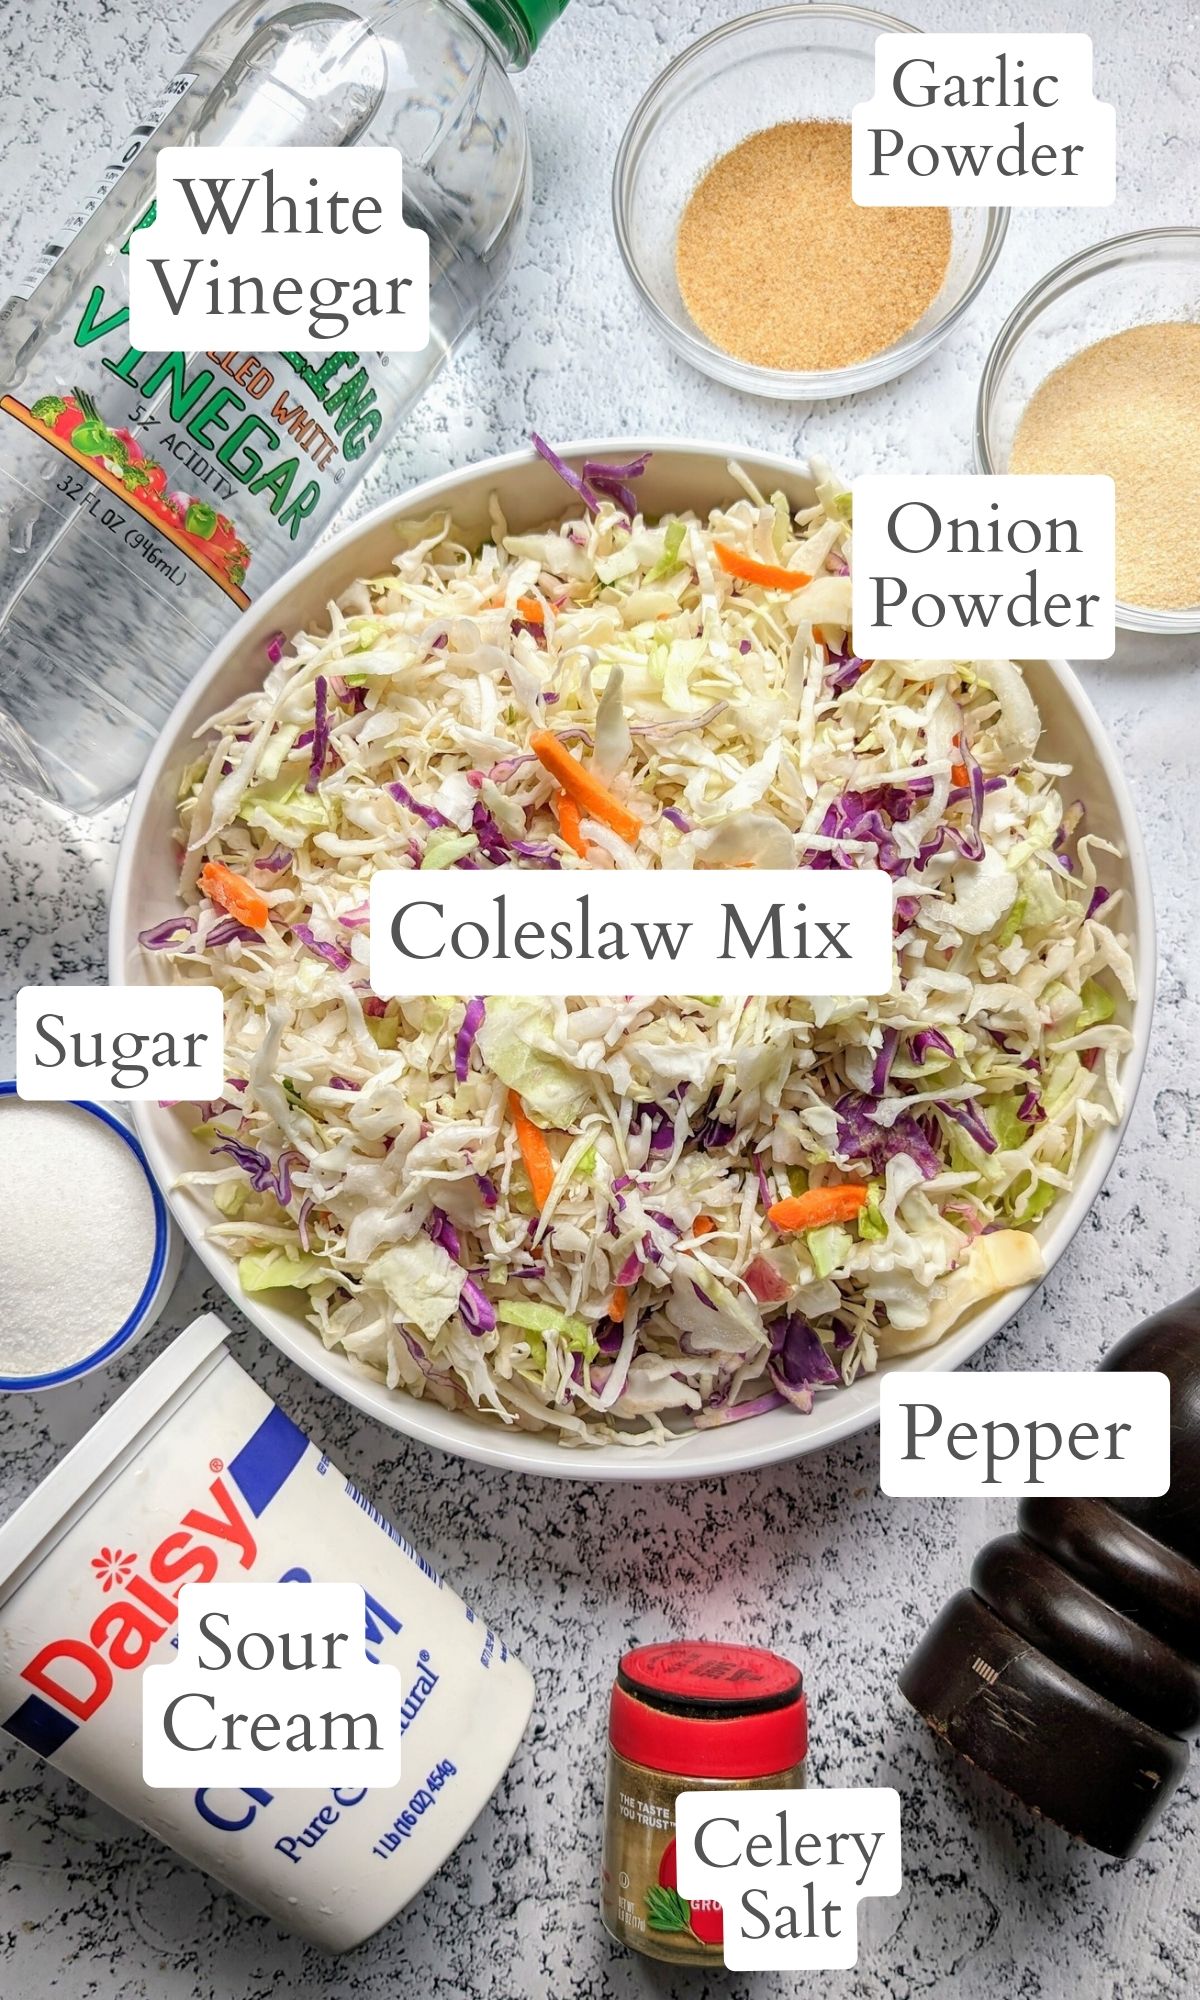 sour cream coleslaw ingredients laid out like white vinegar, onion powder, garlic powder, sugar, and celery salt and pepper.